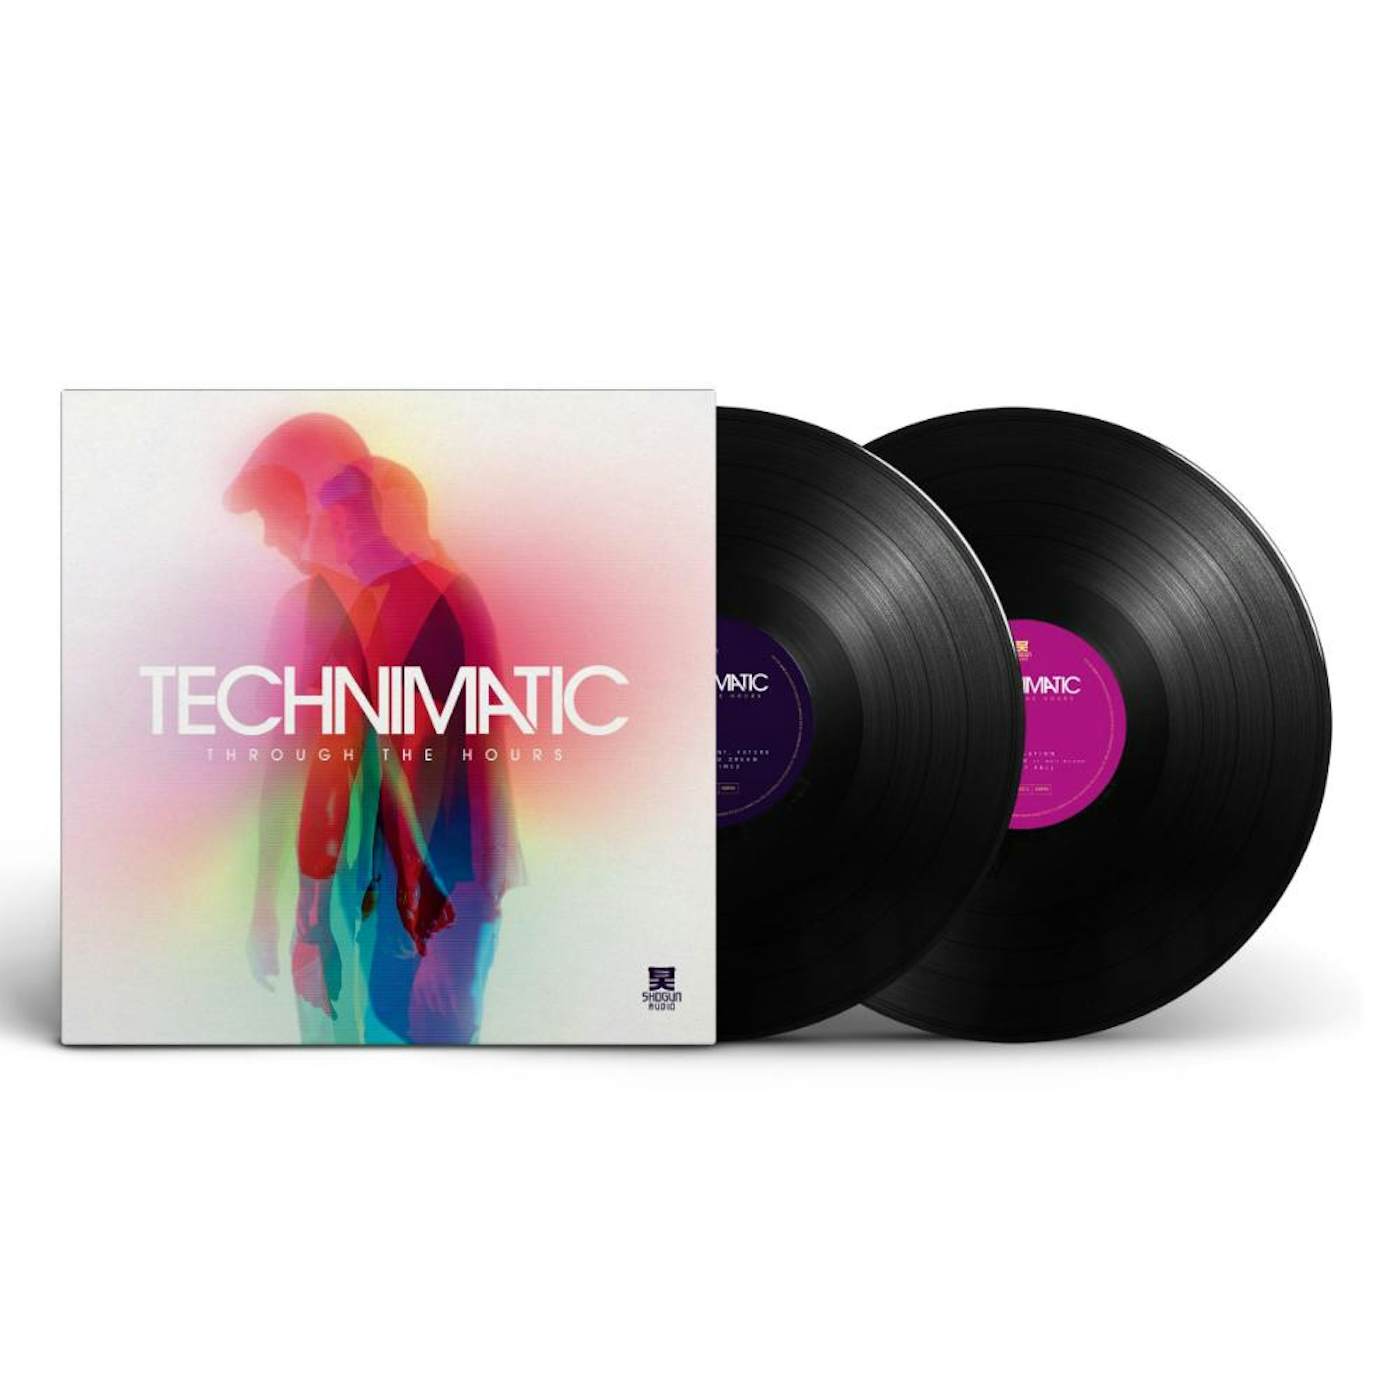 Technimatic - Through The Hours (2x12" vinyl in gatefold sleeve)